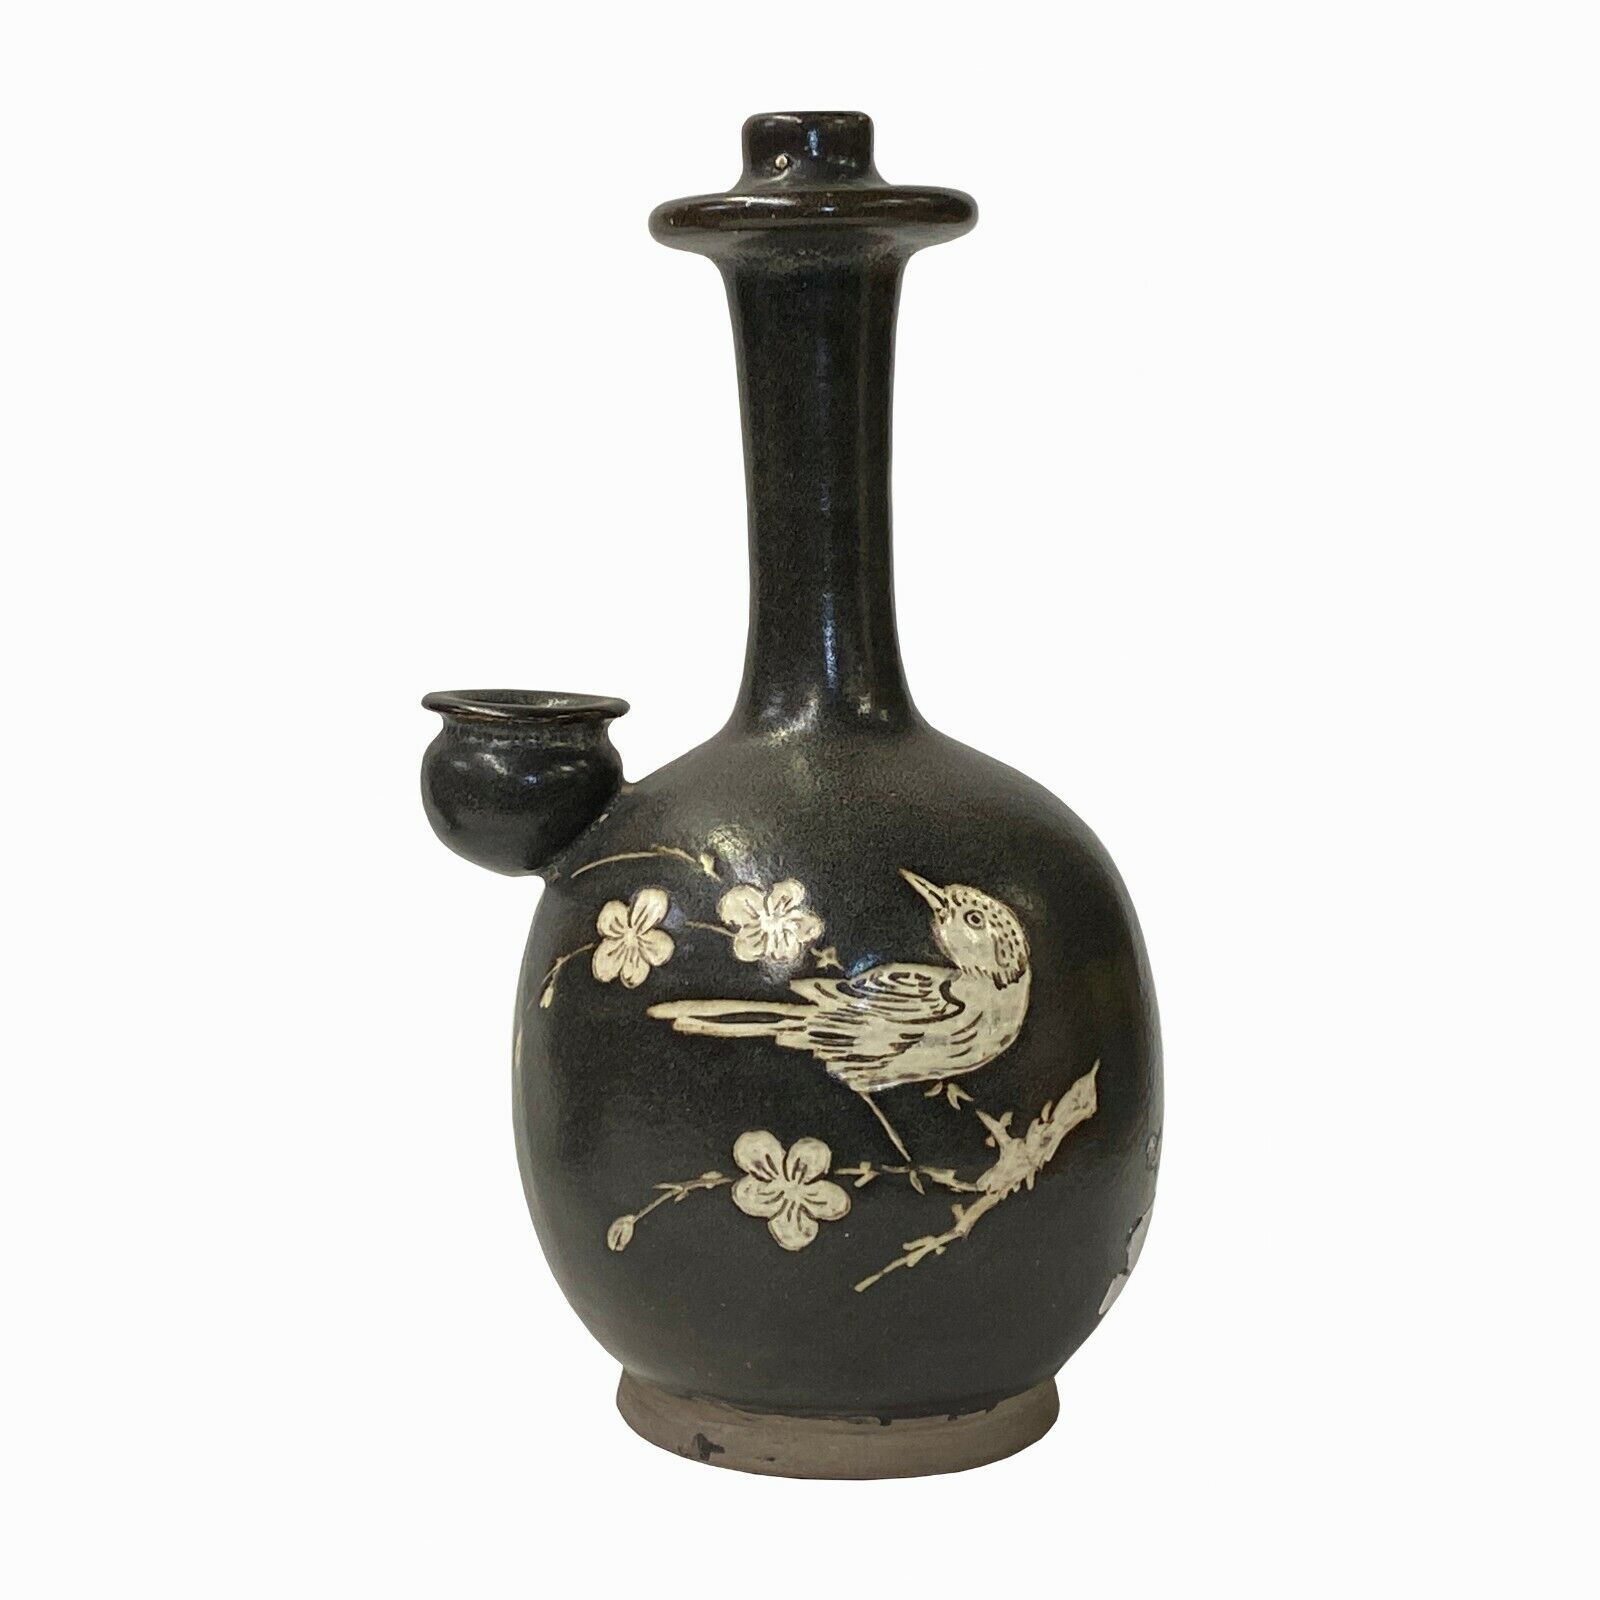 Chinese Ware Brown Black Glaze Ceramic Jar Vase Display Art ws1169